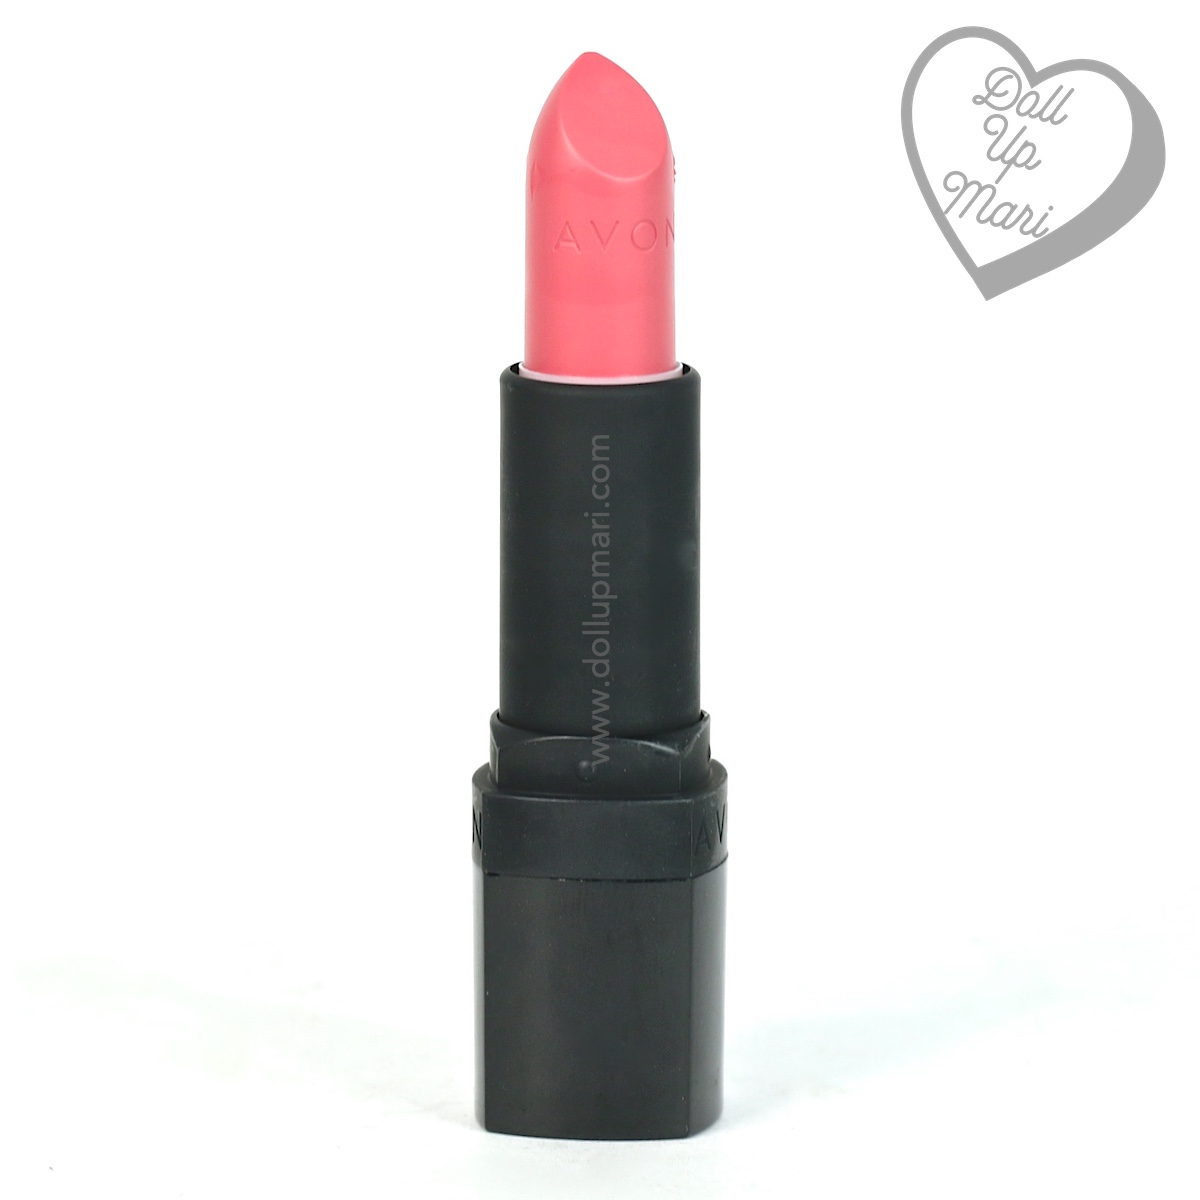 pack shot of Rose Awakening shade of AVON Perfectly Matte Lipstick